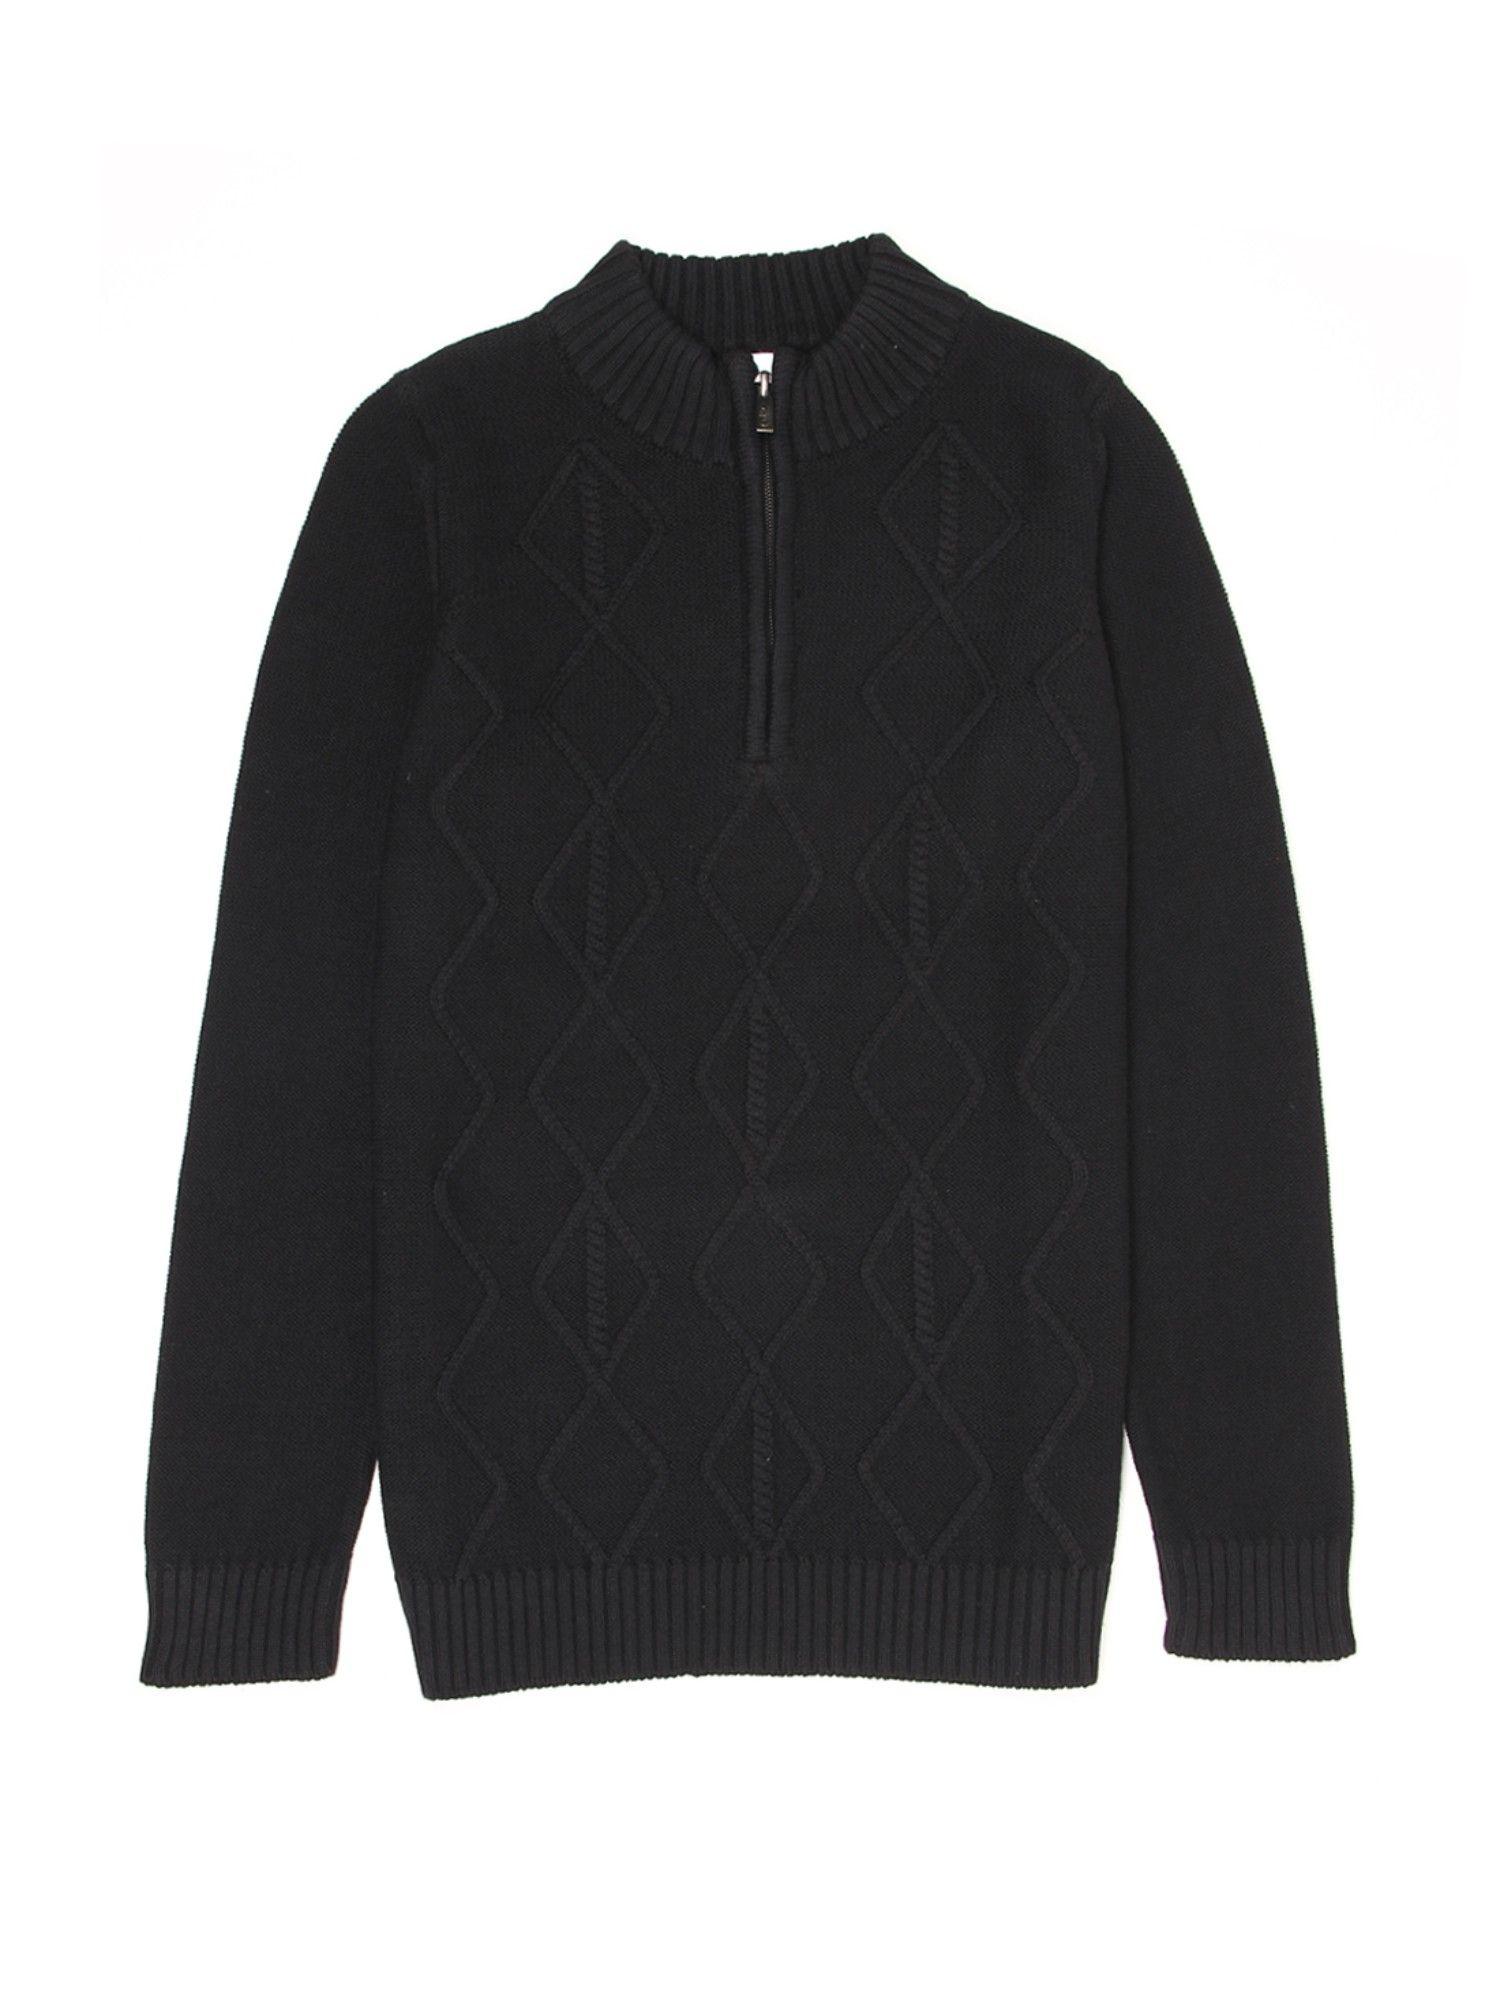 boys self design black sweater